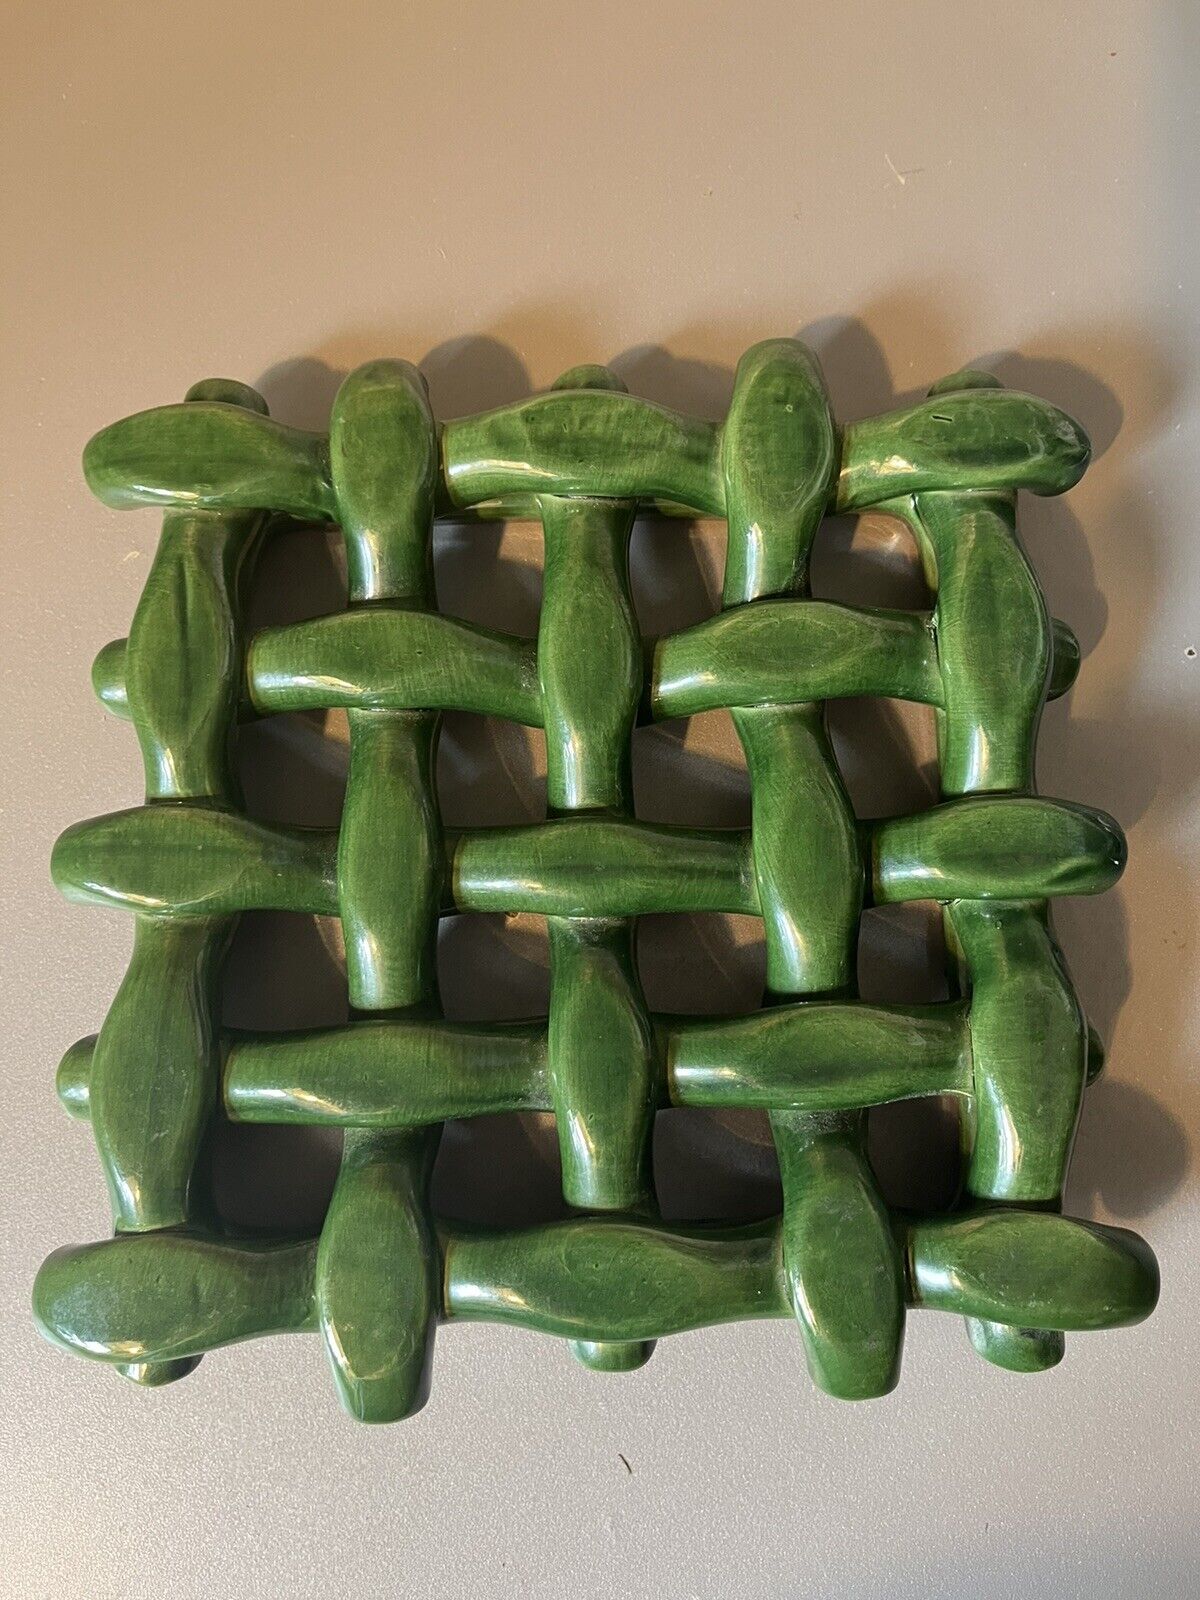 Vintage Berardos Green Lattice Ceramic Trivet Made in Portugal 7” x 7”